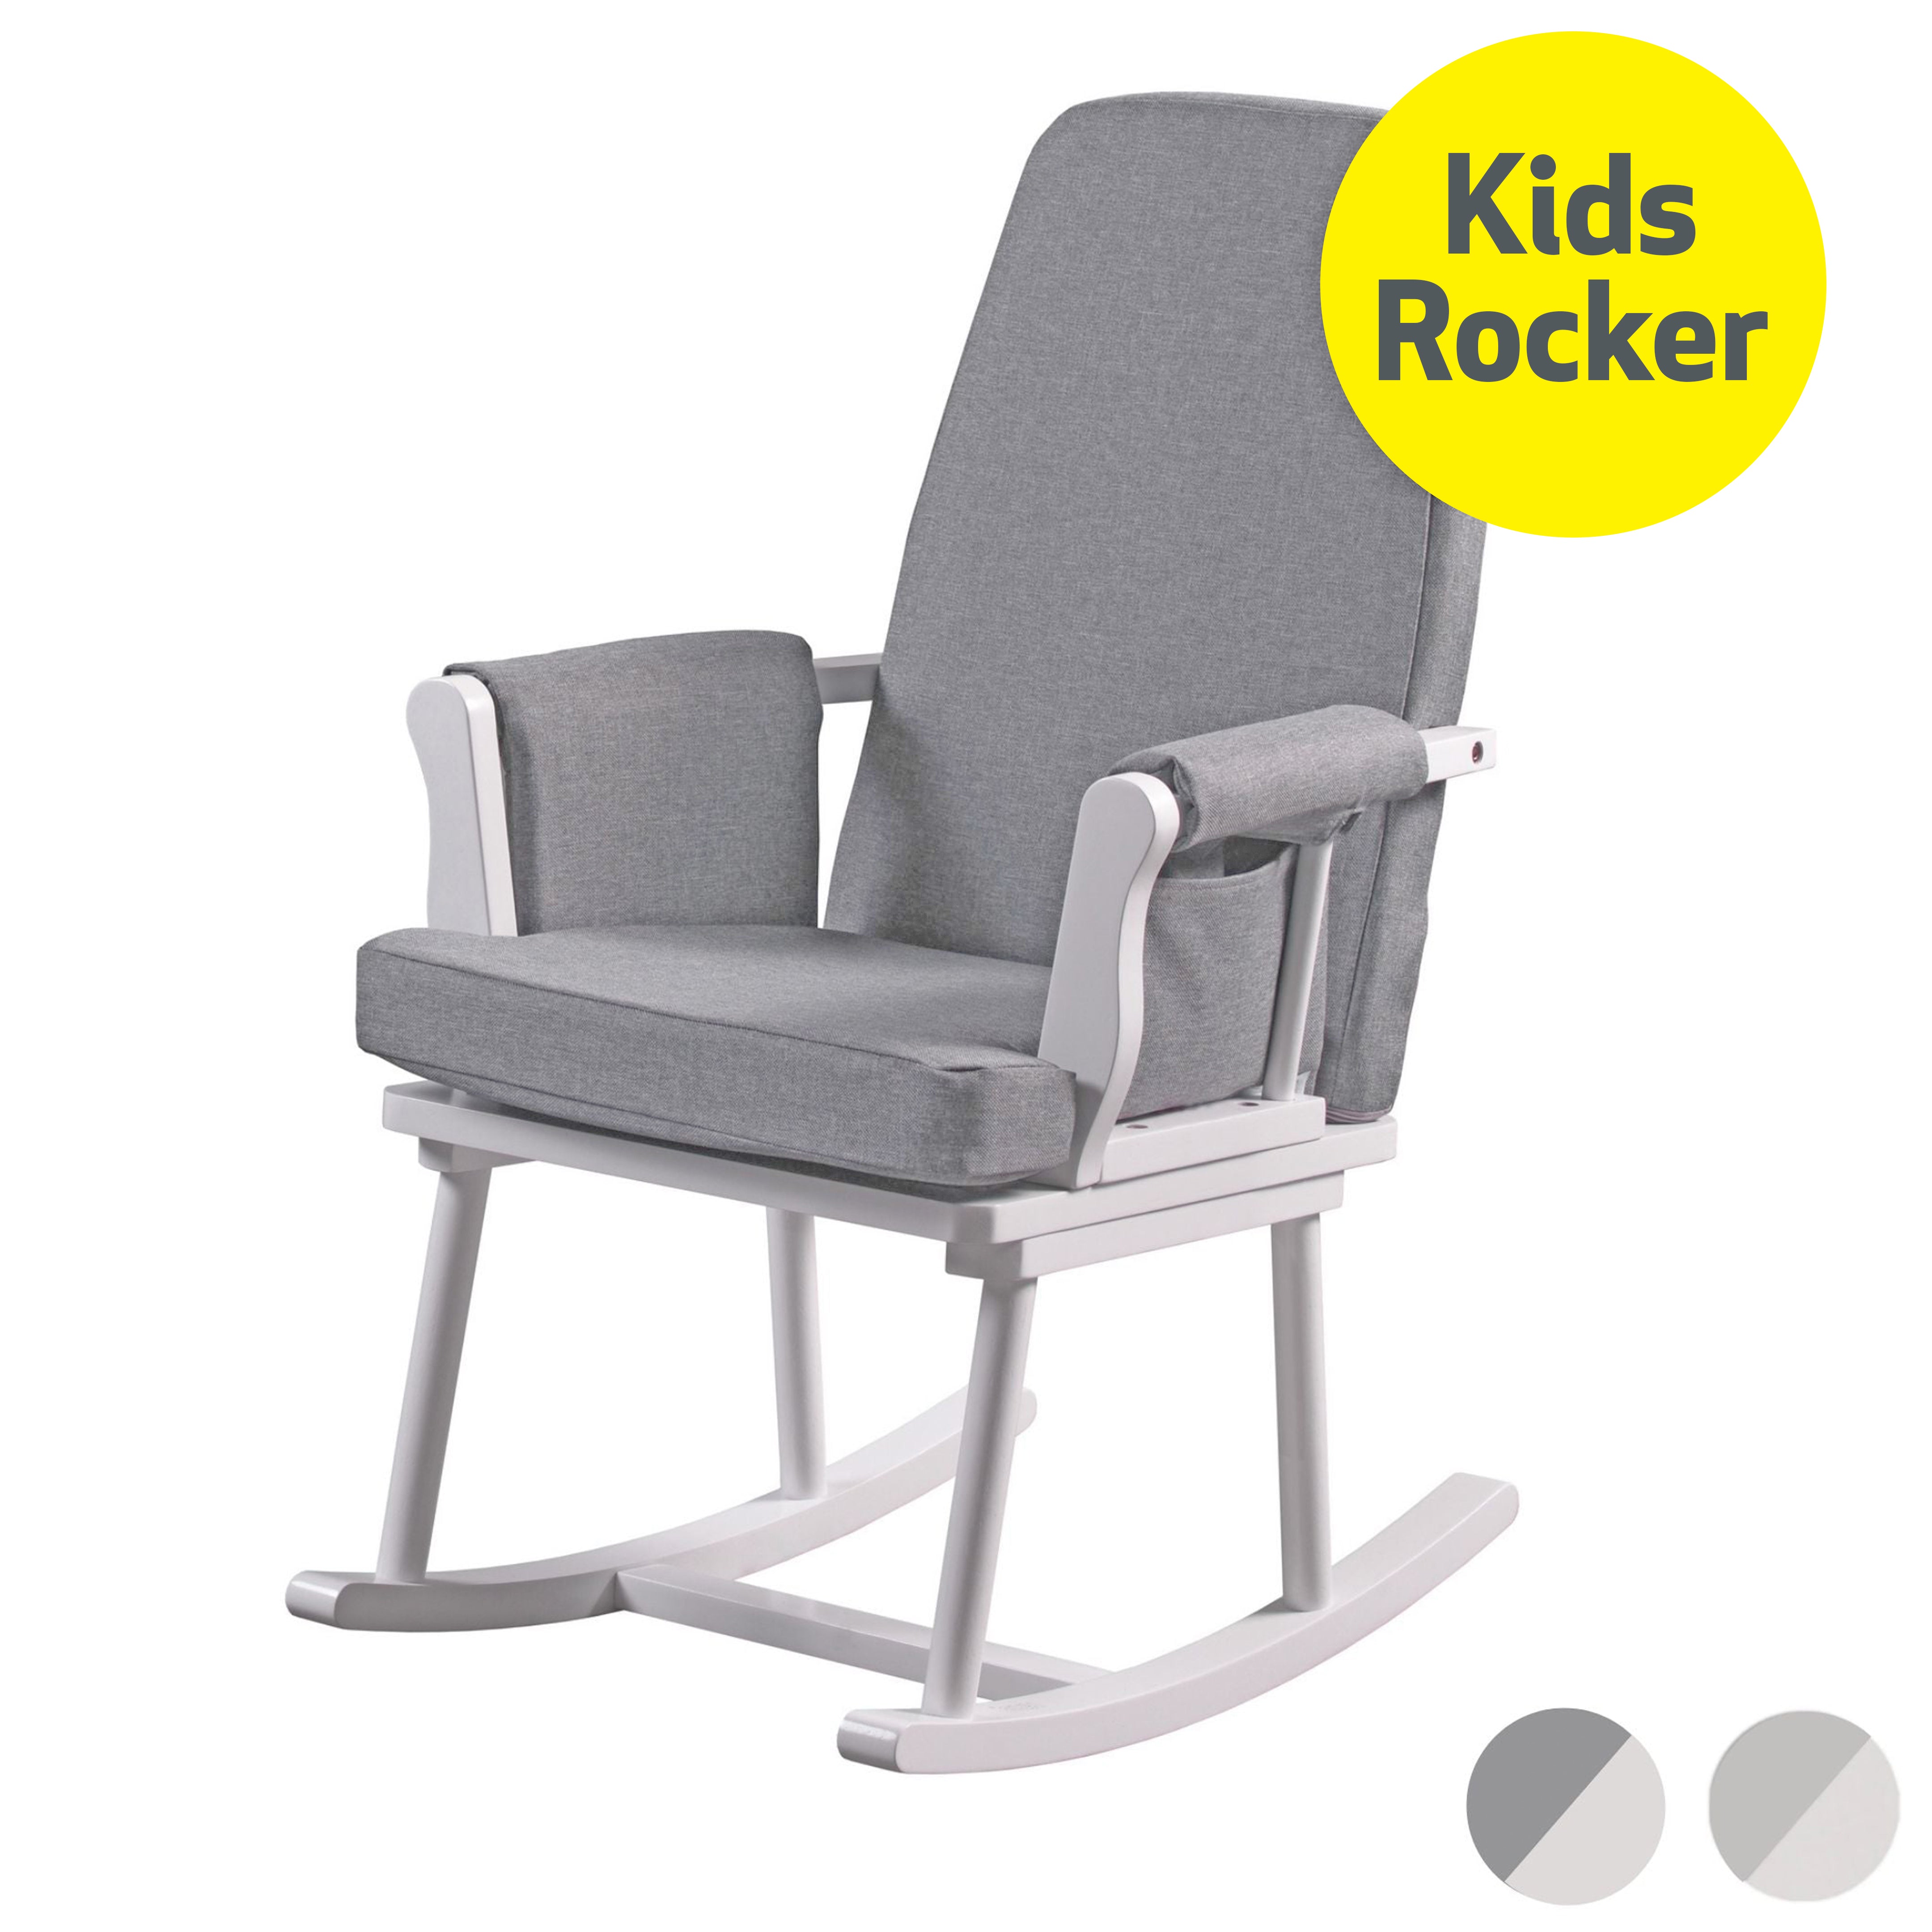 Haldon Kids Rocking Chair - 50% OFF